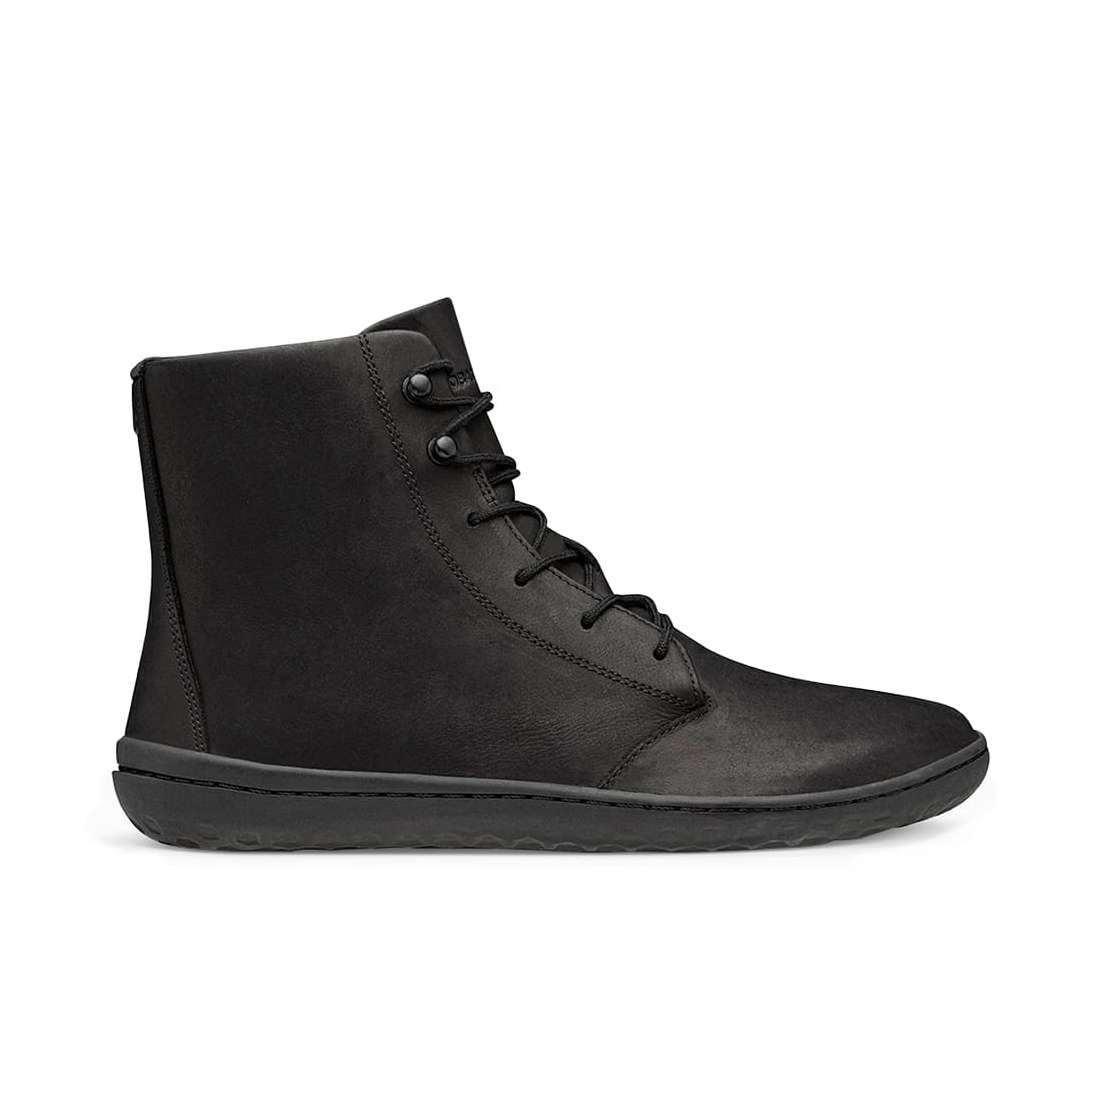 Boot minimalist casual| VivoBarefoot Gobi Hi III Leather